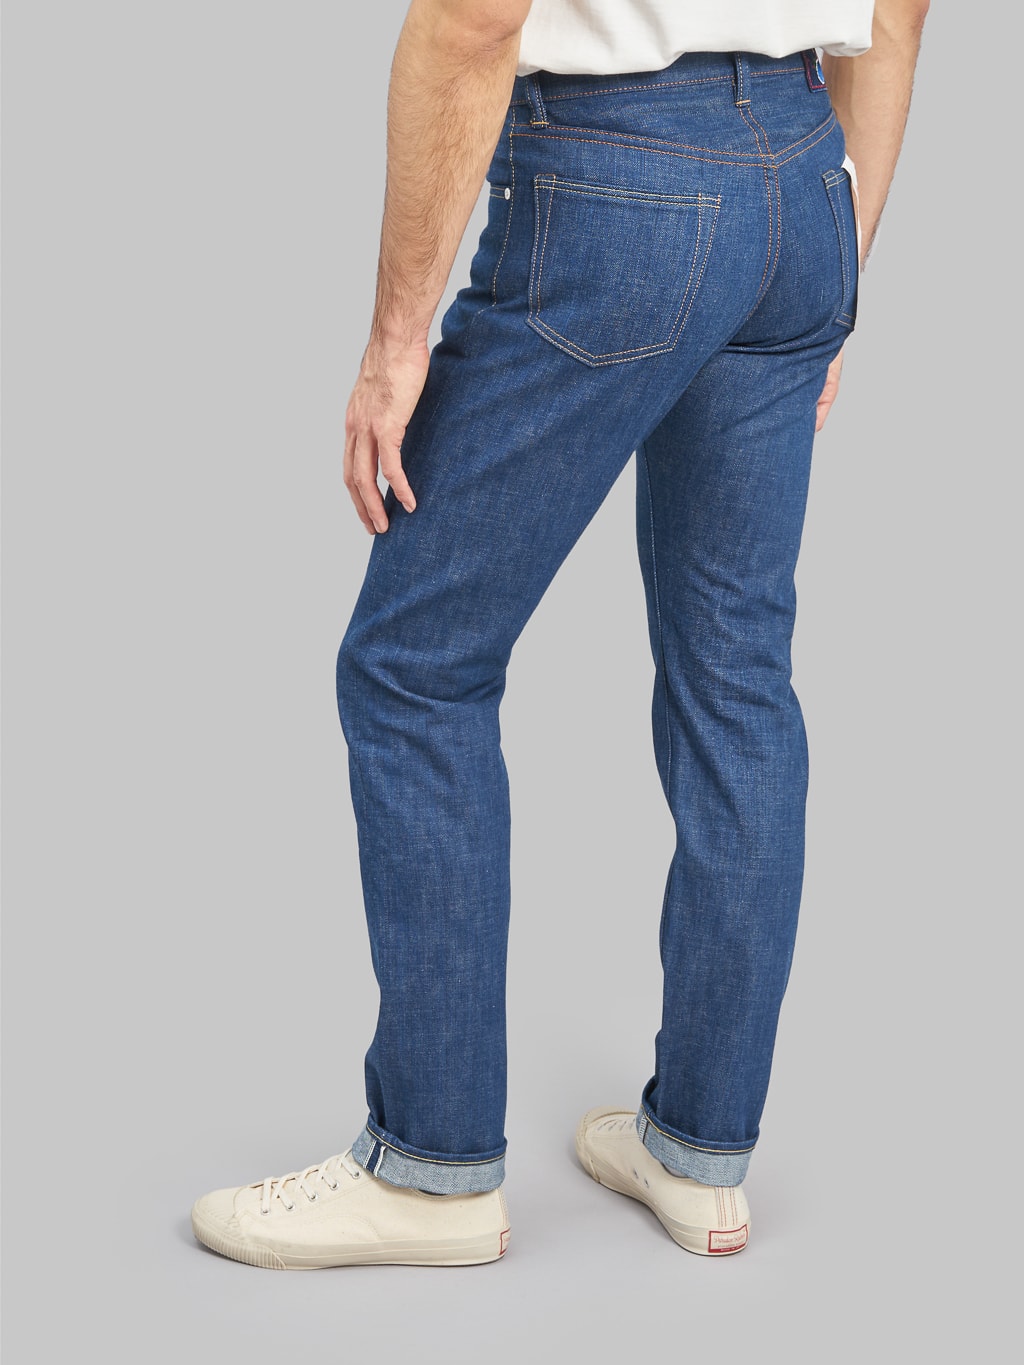 momotaro 0605 ai natural indigo dyed natural tapered denim jeans fitting